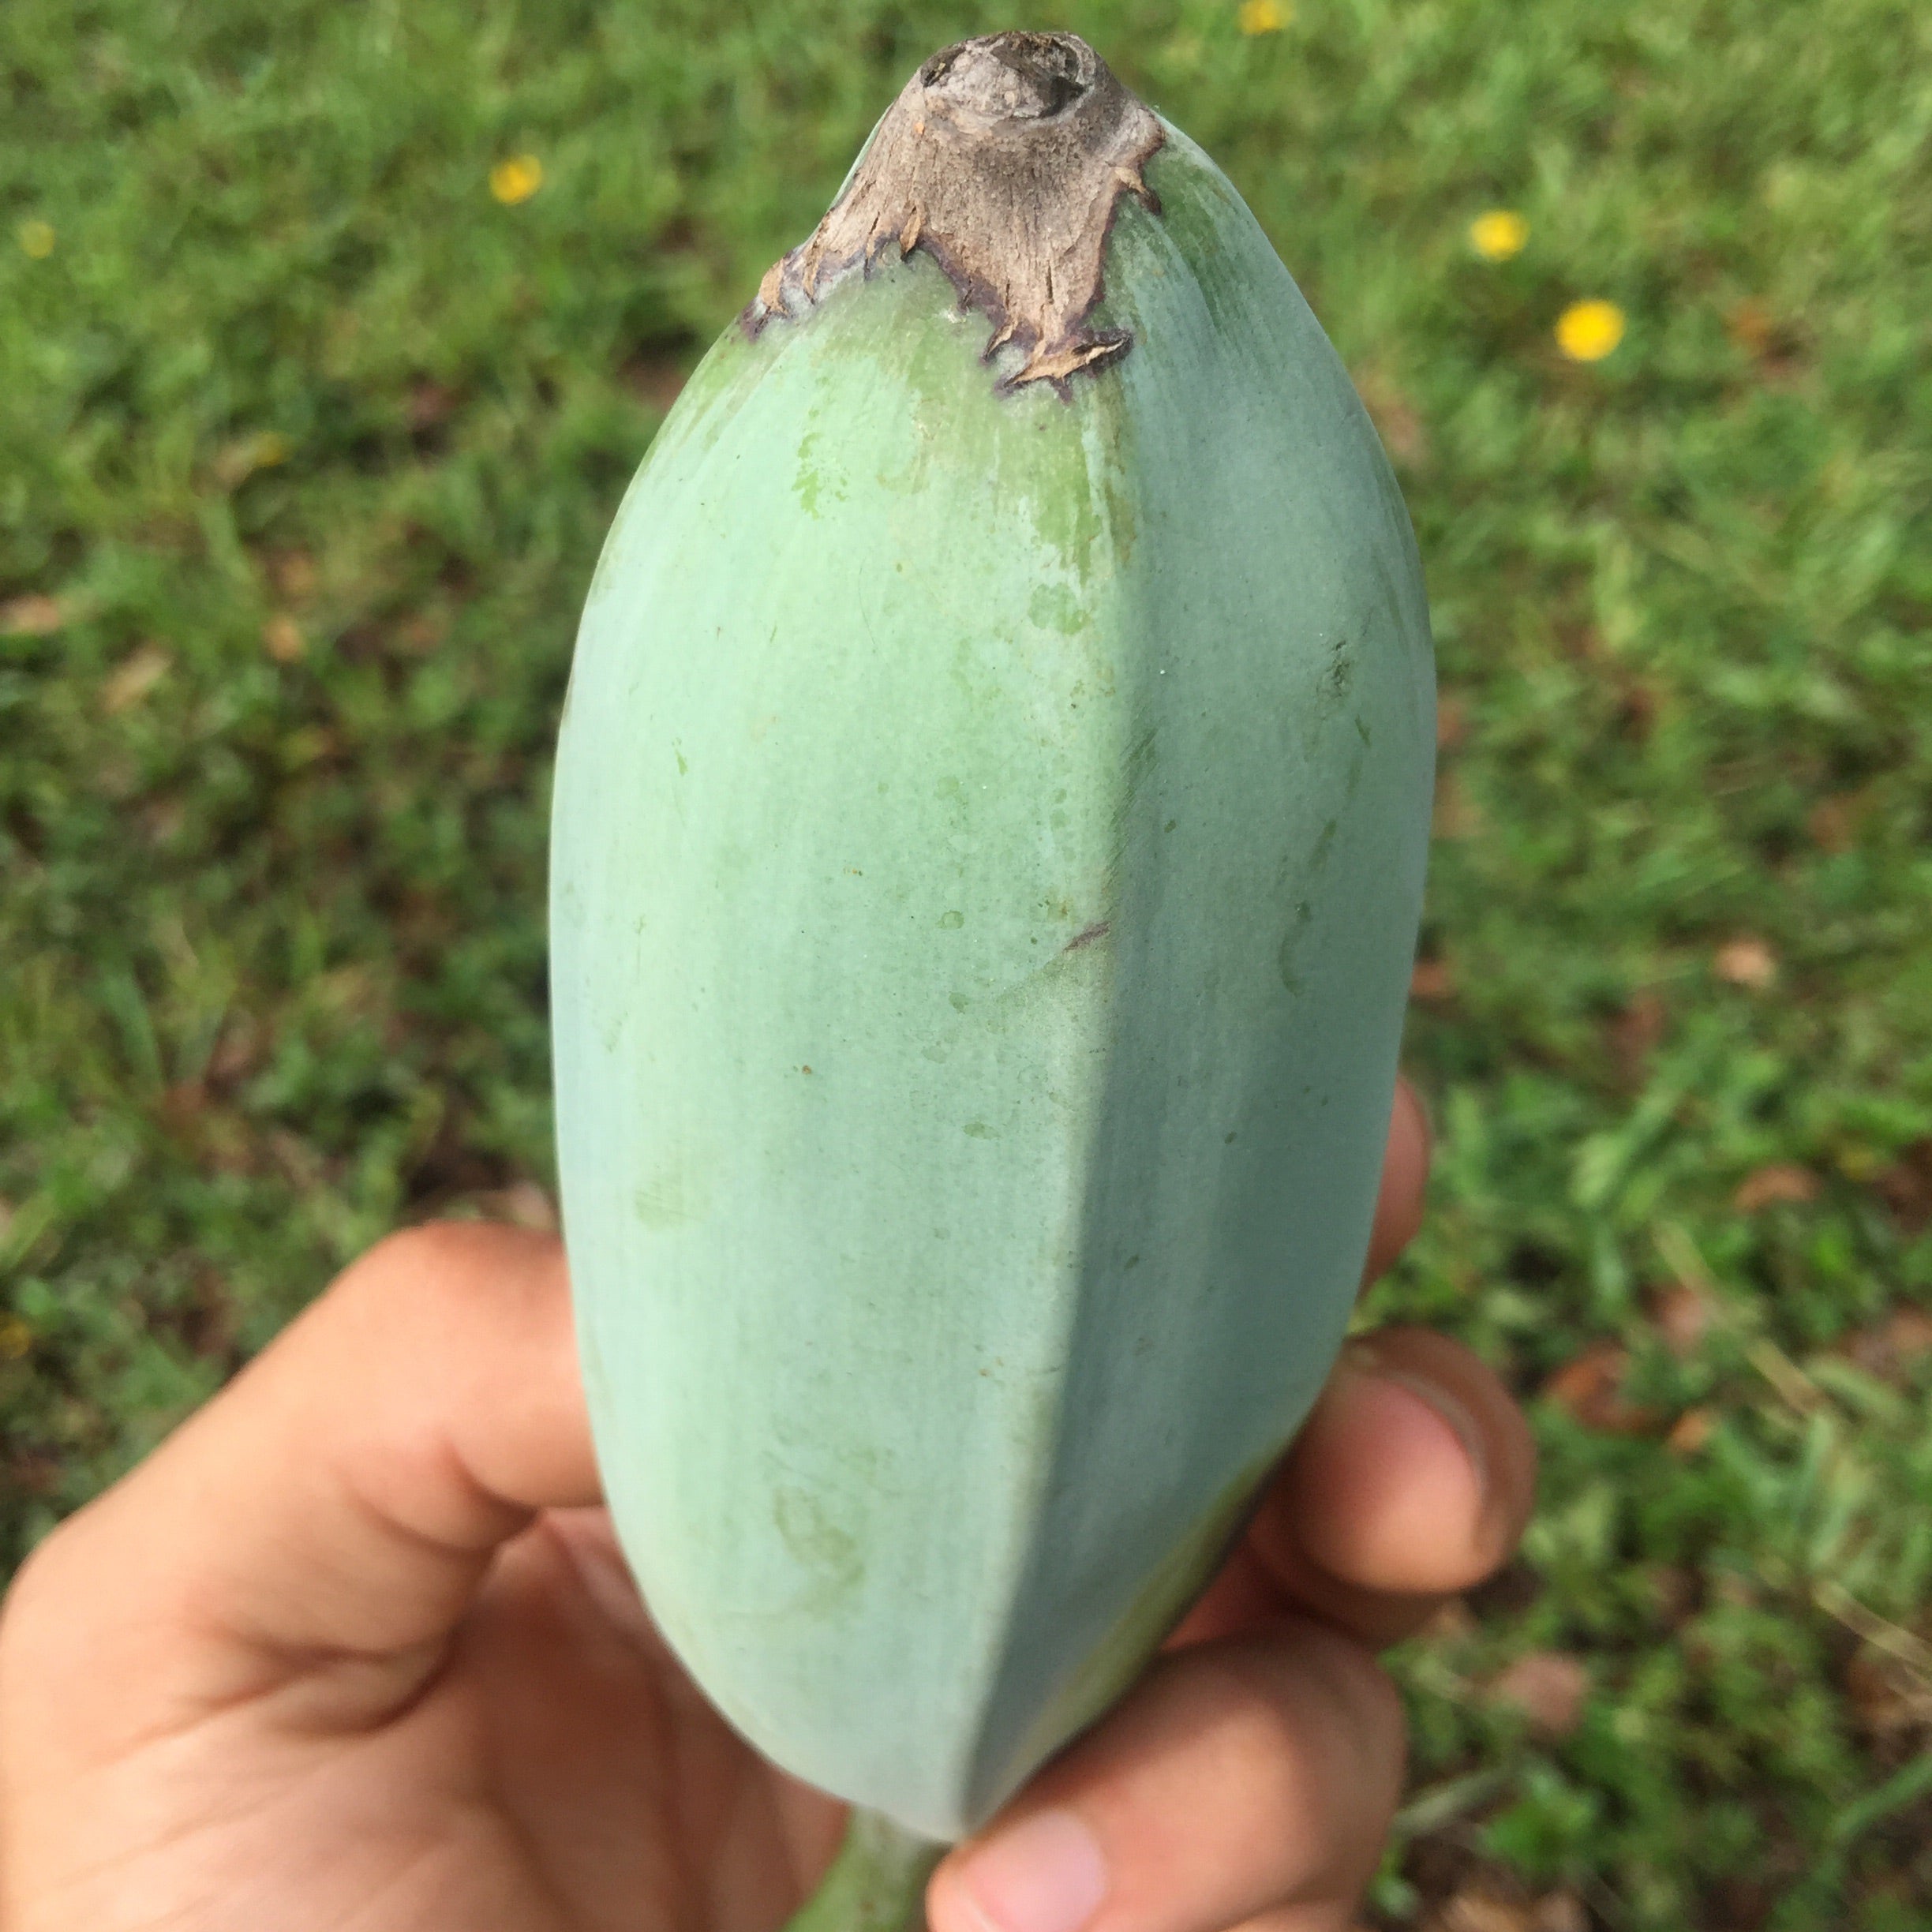 Blue Java Banana Pre Order Miami Fruit